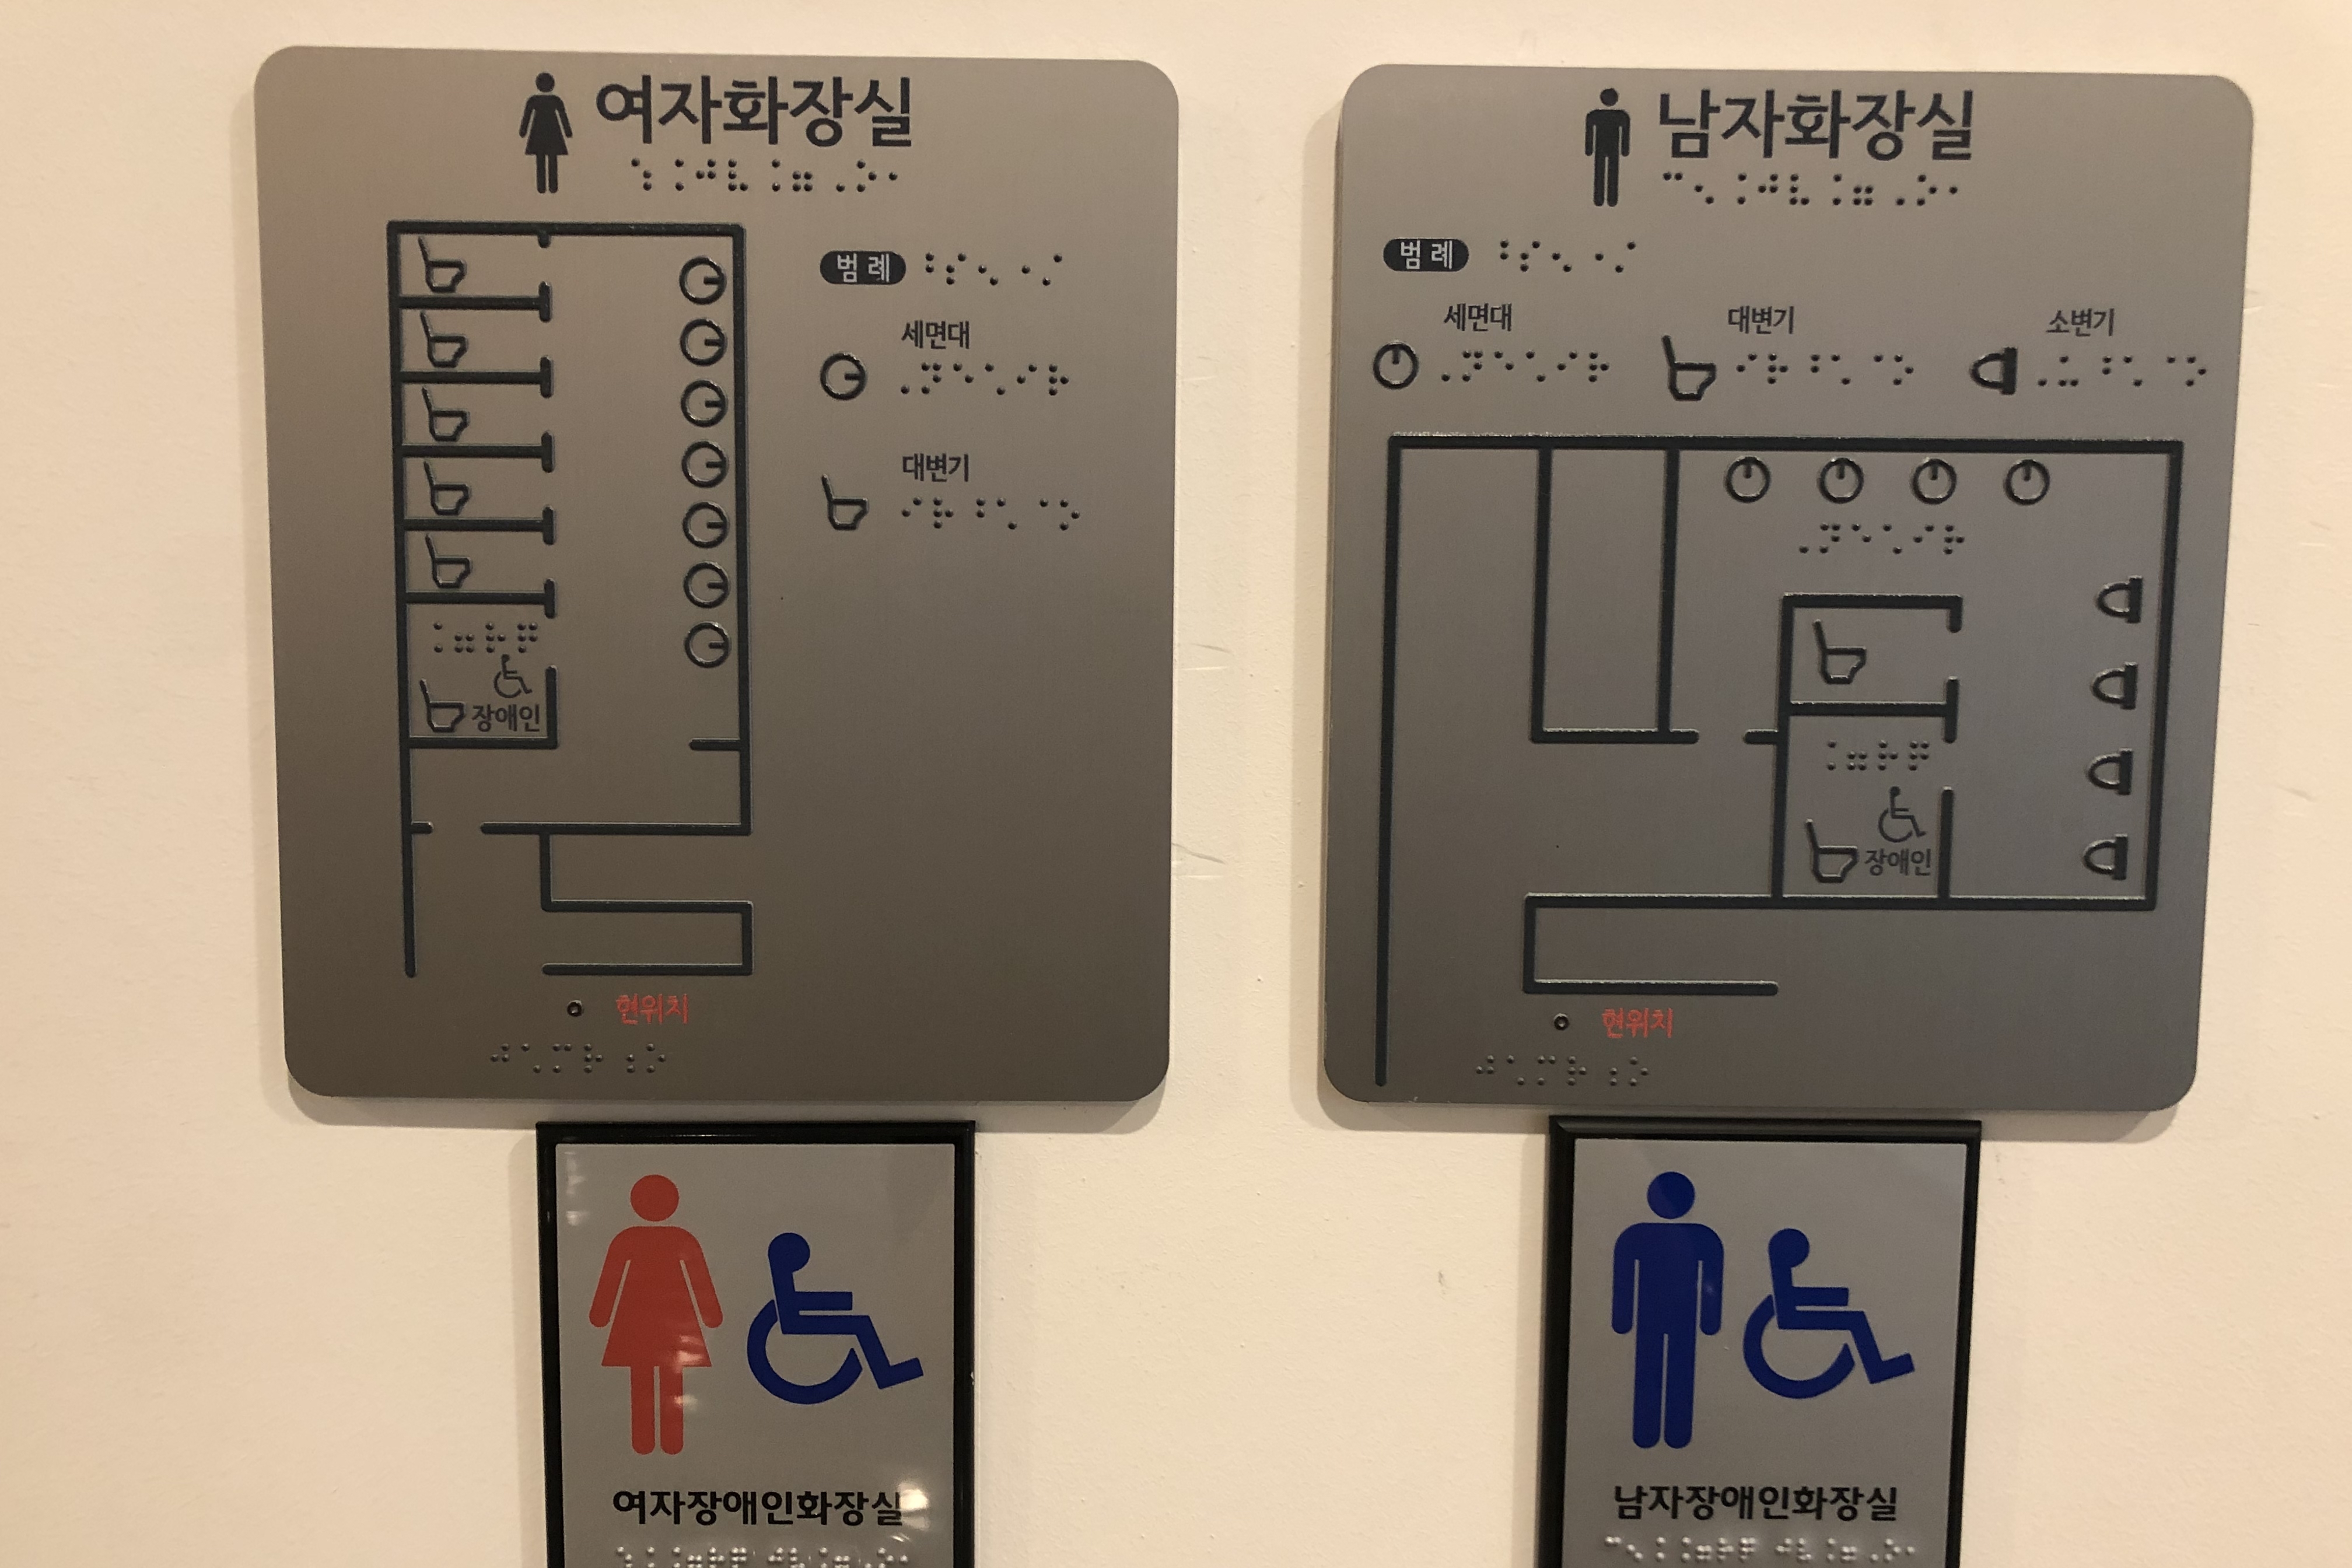 Restroom0 : Korean braille description board for men's restroom and women's restroom
